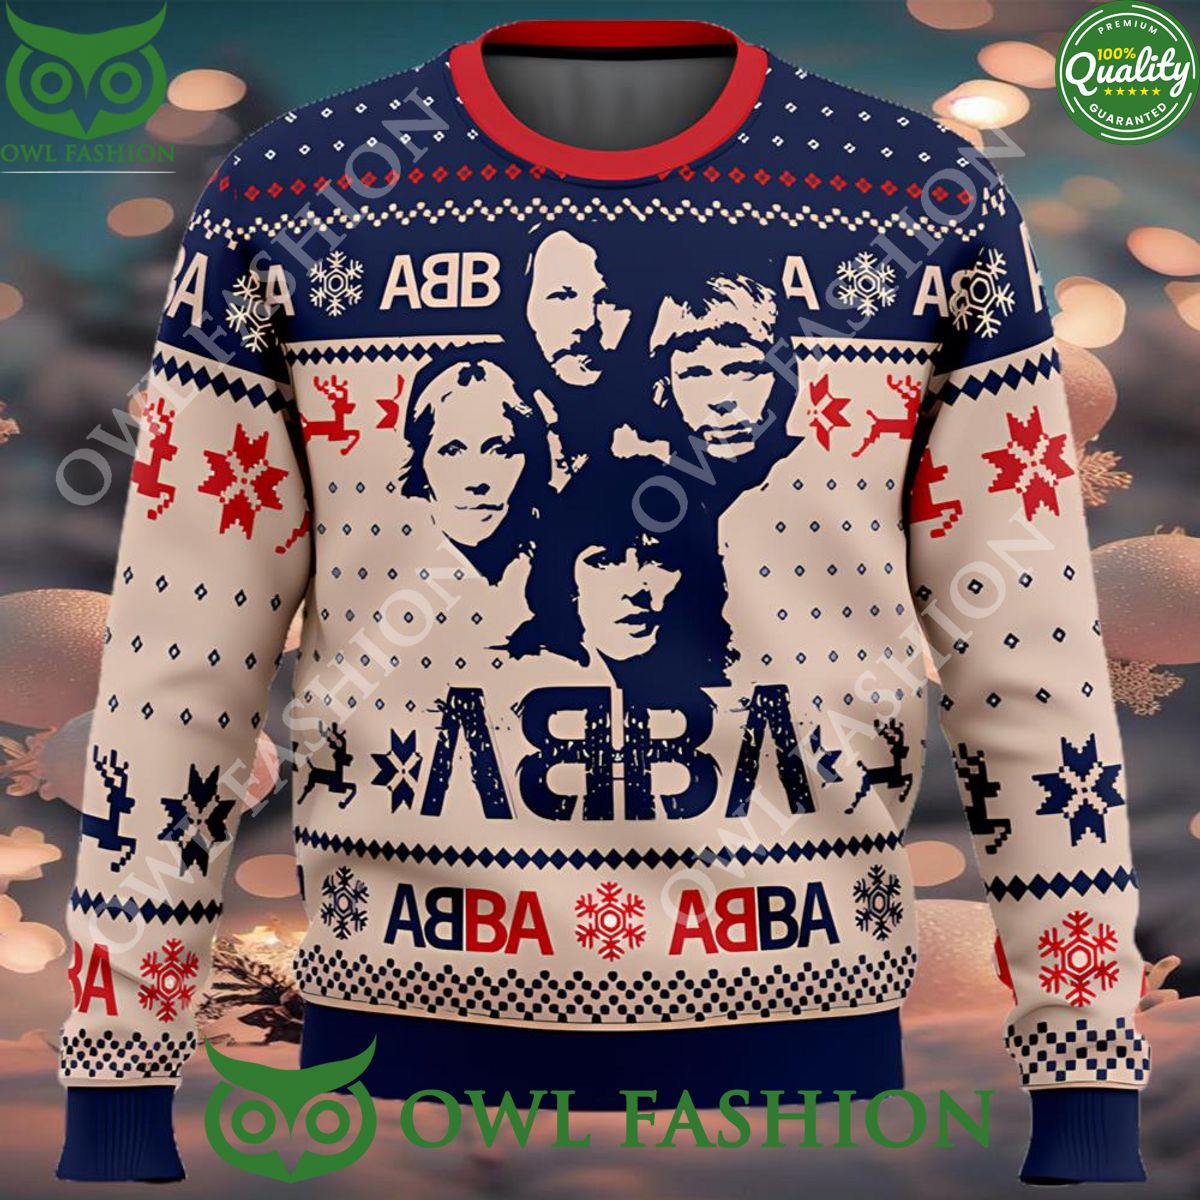 abba members ugly christmas sweater jumper 1 CIYC8.jpg